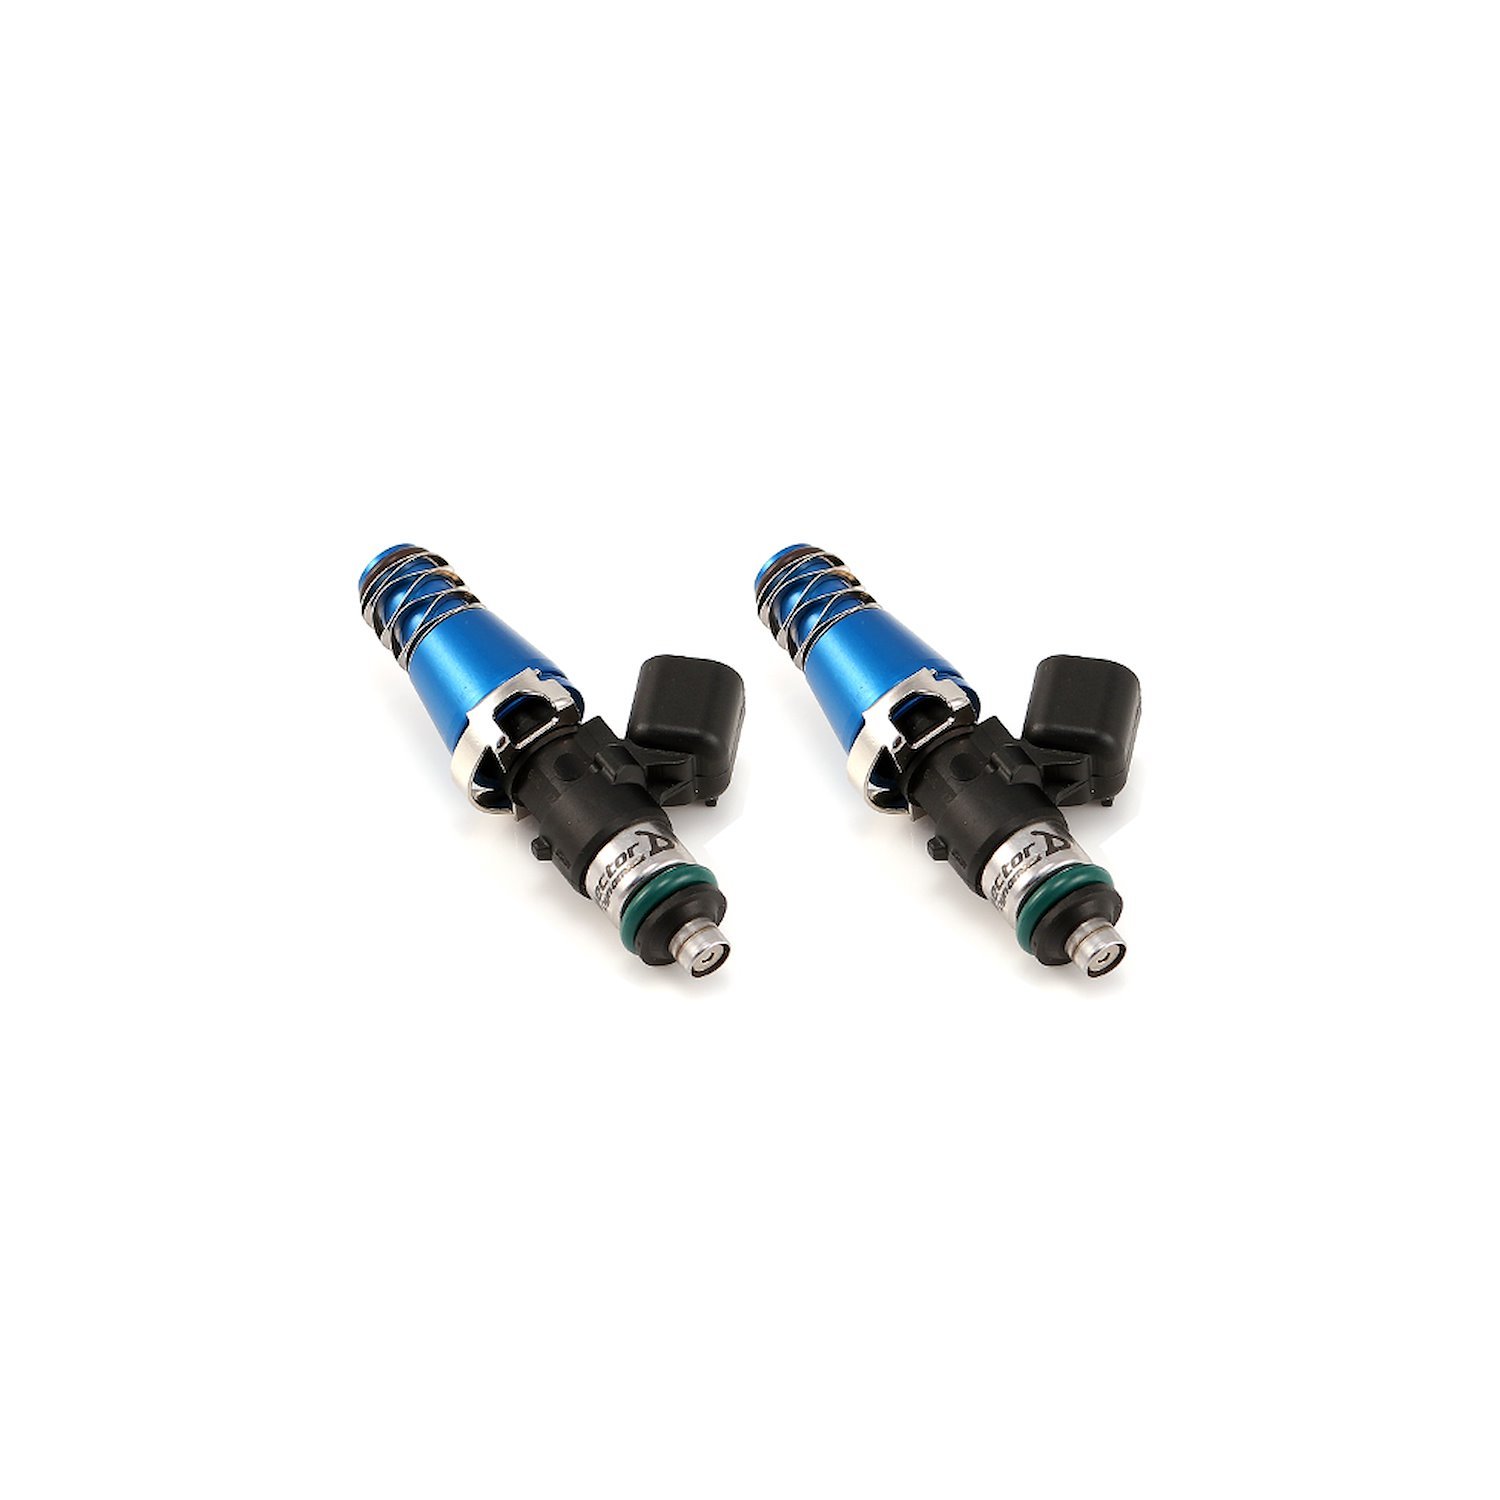 1050.11.03.60.11.2 1050cc Fuel Injector Set, 11 mm (Blue) Adaptors, 204 / 14 mm Lower O-Rings